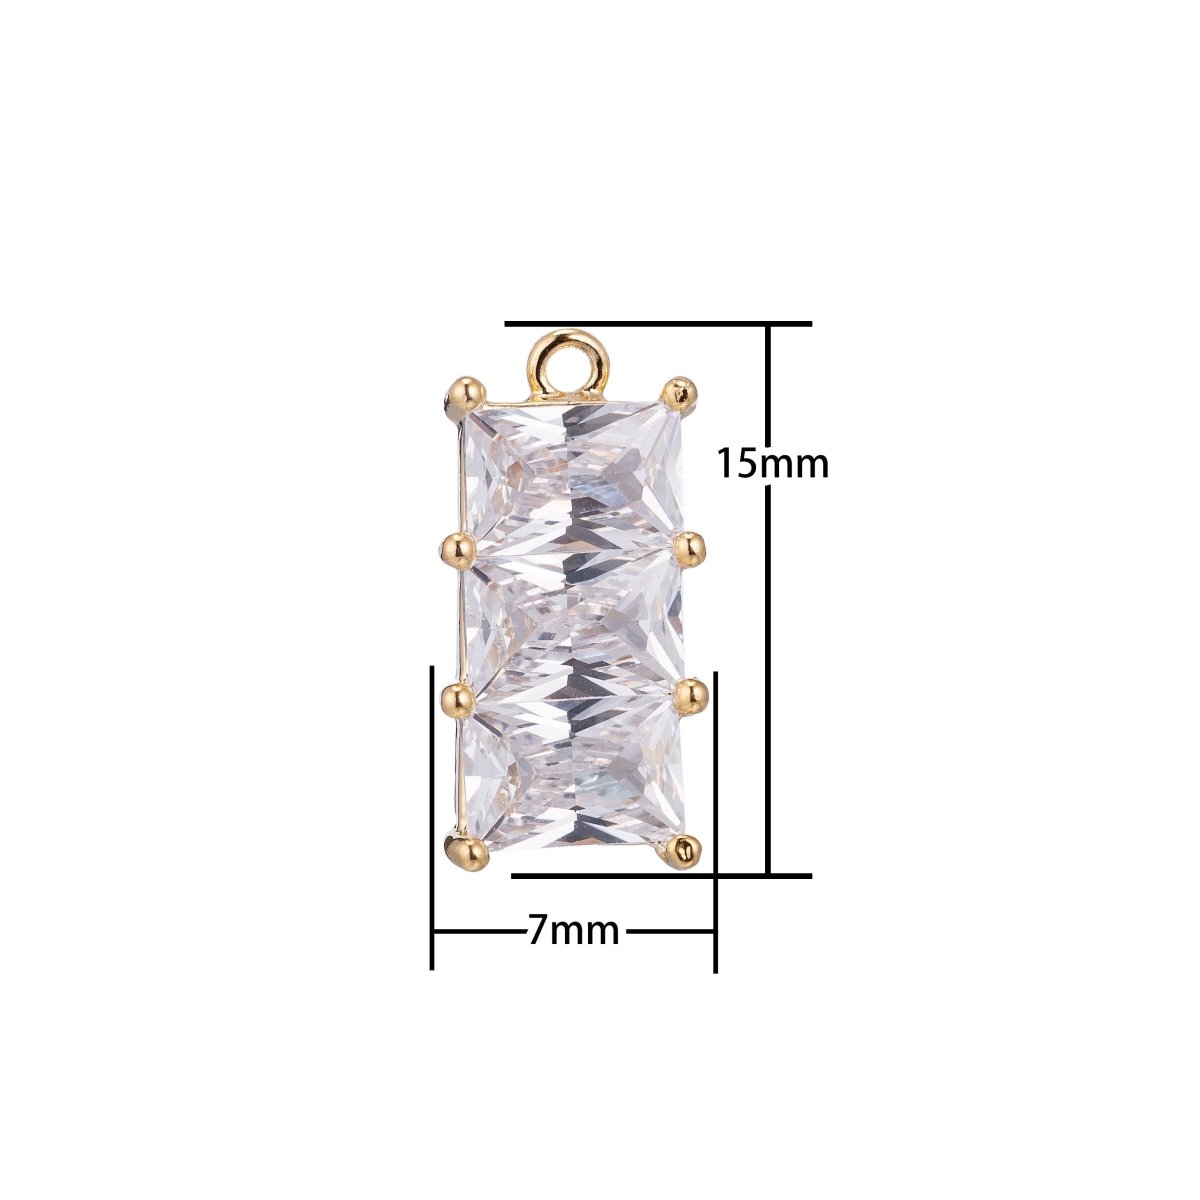 1pcs 18k Gold Filed Rectangular Cut Pendant for necklace Earring April Birthstone Cubic Zirconia Square Diamond Shape Charm, C-373 - DLUXCA